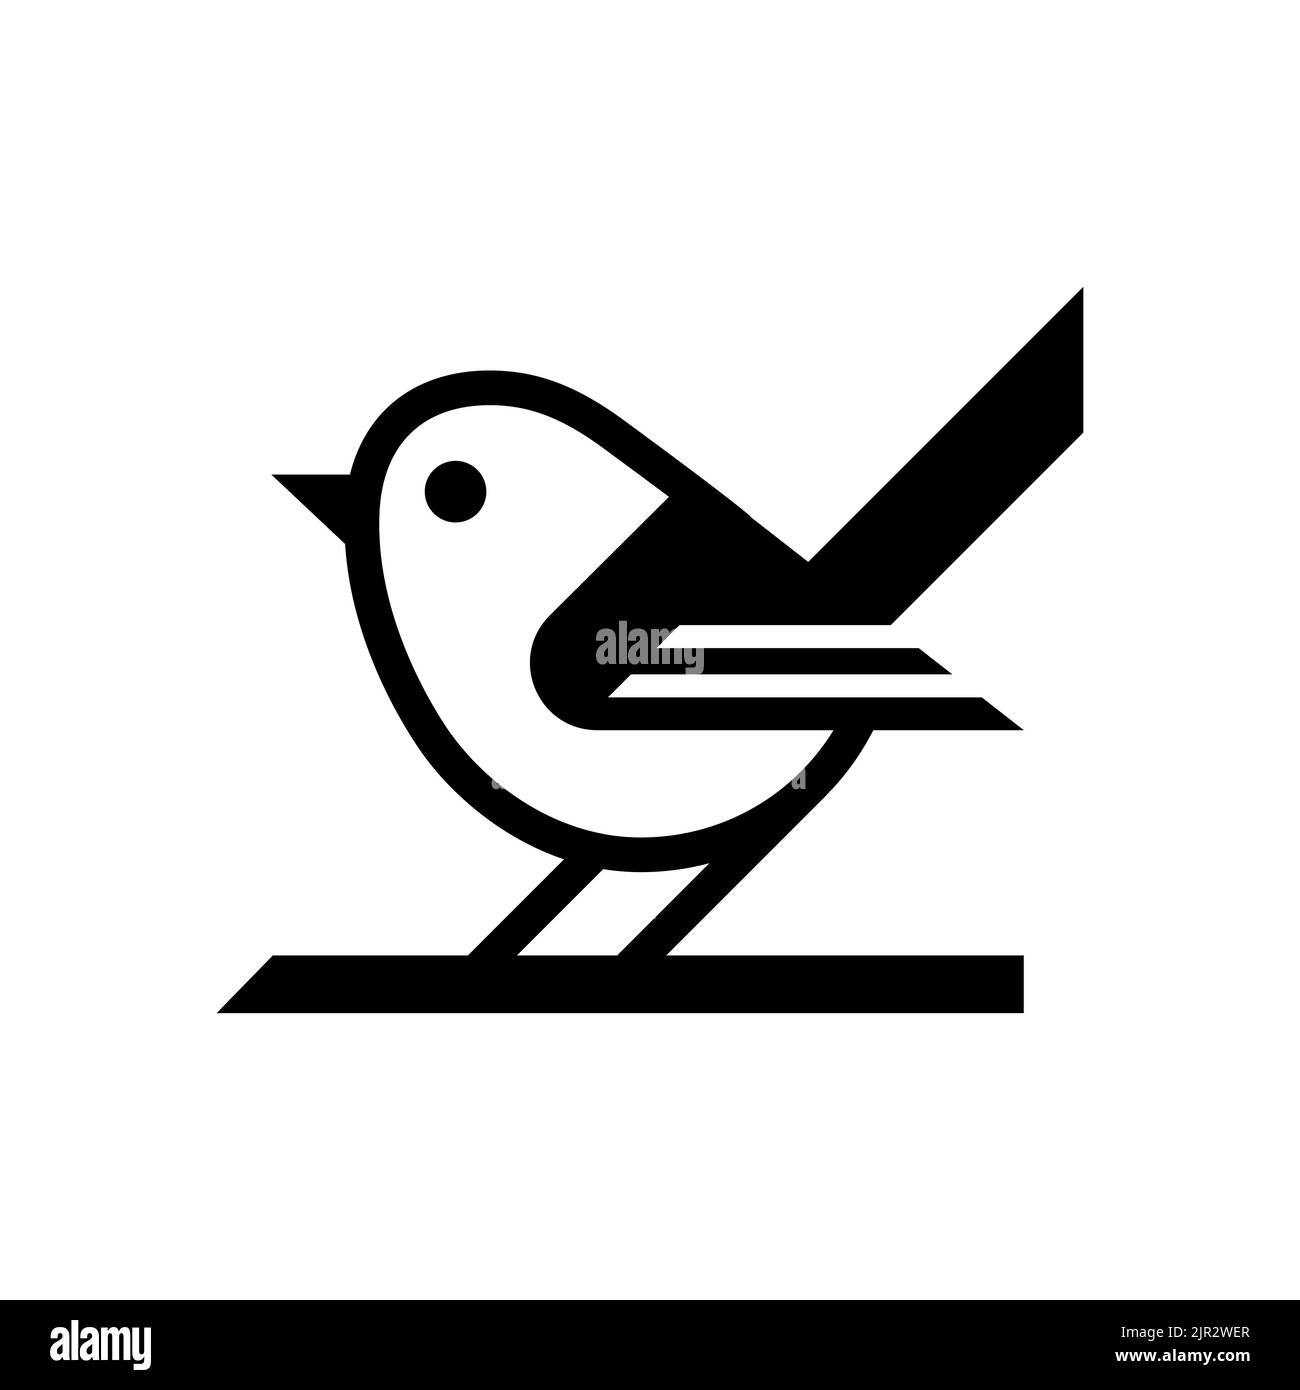 Simple cartoon bird icon. Minimal geometric logo design element, vector illustration. Stock Vector